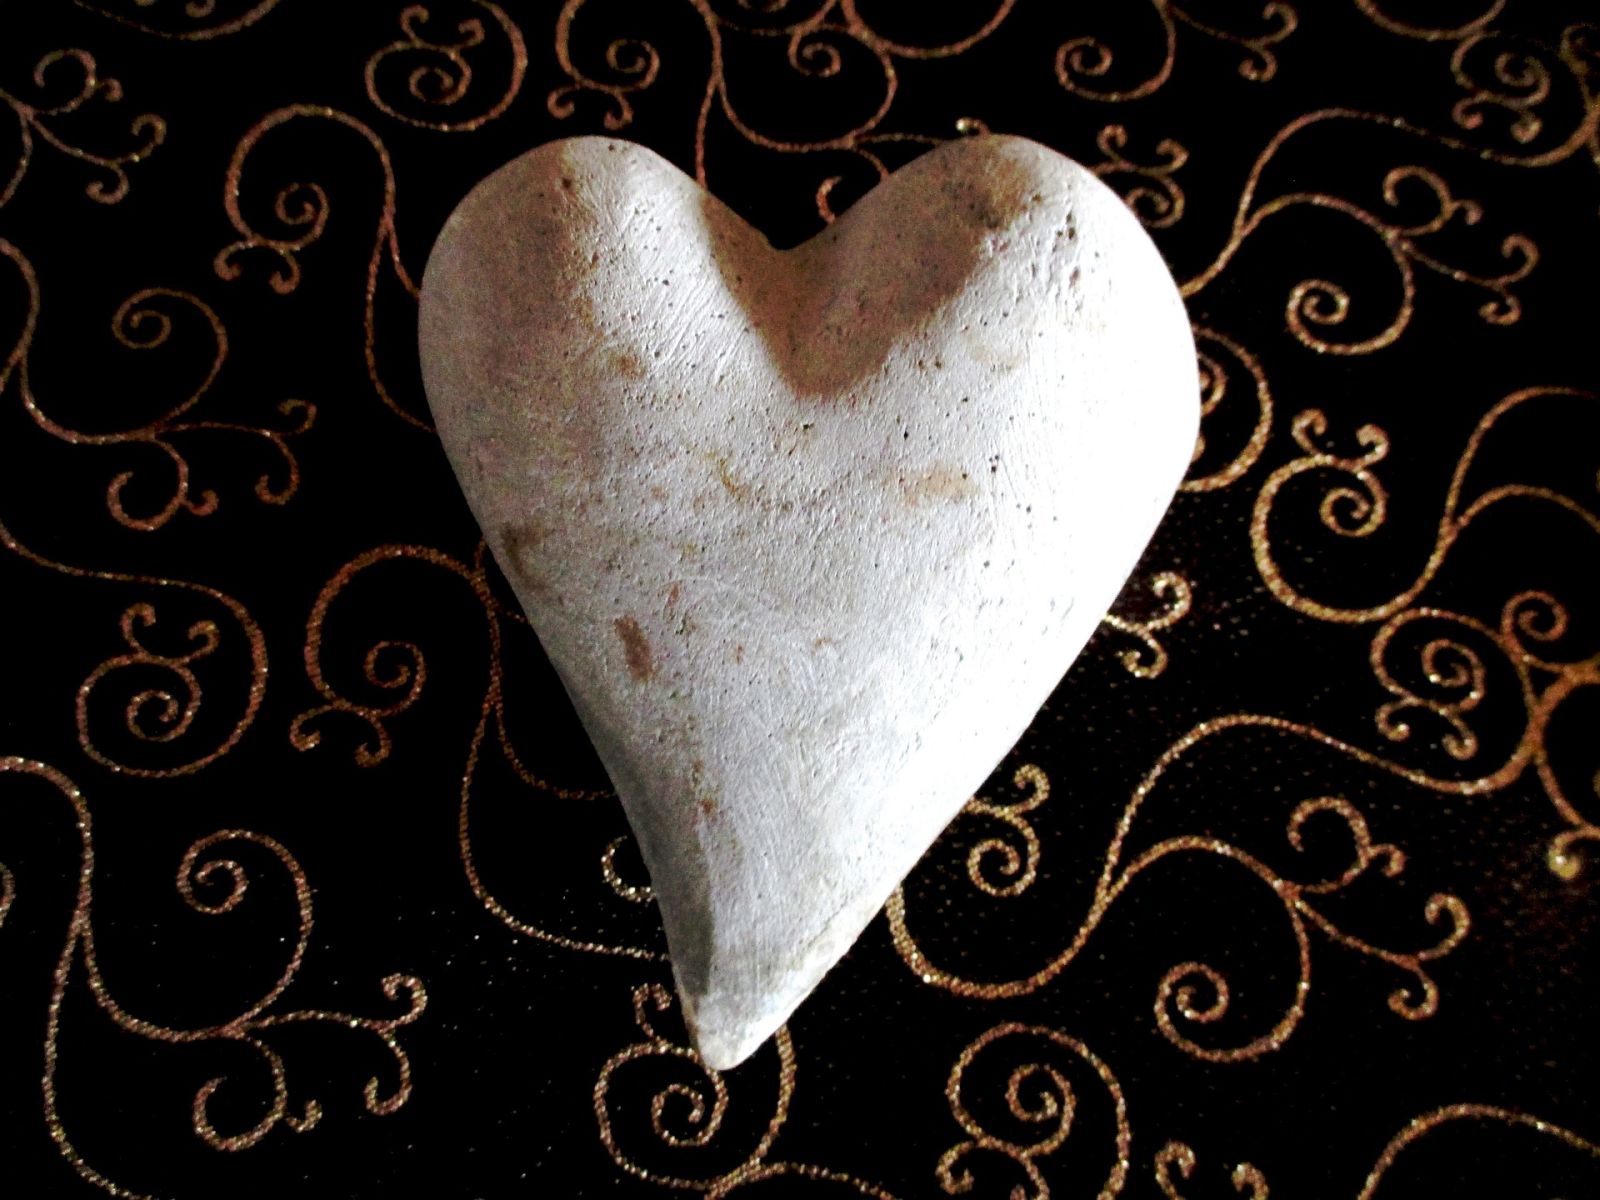 A heartshaped stone